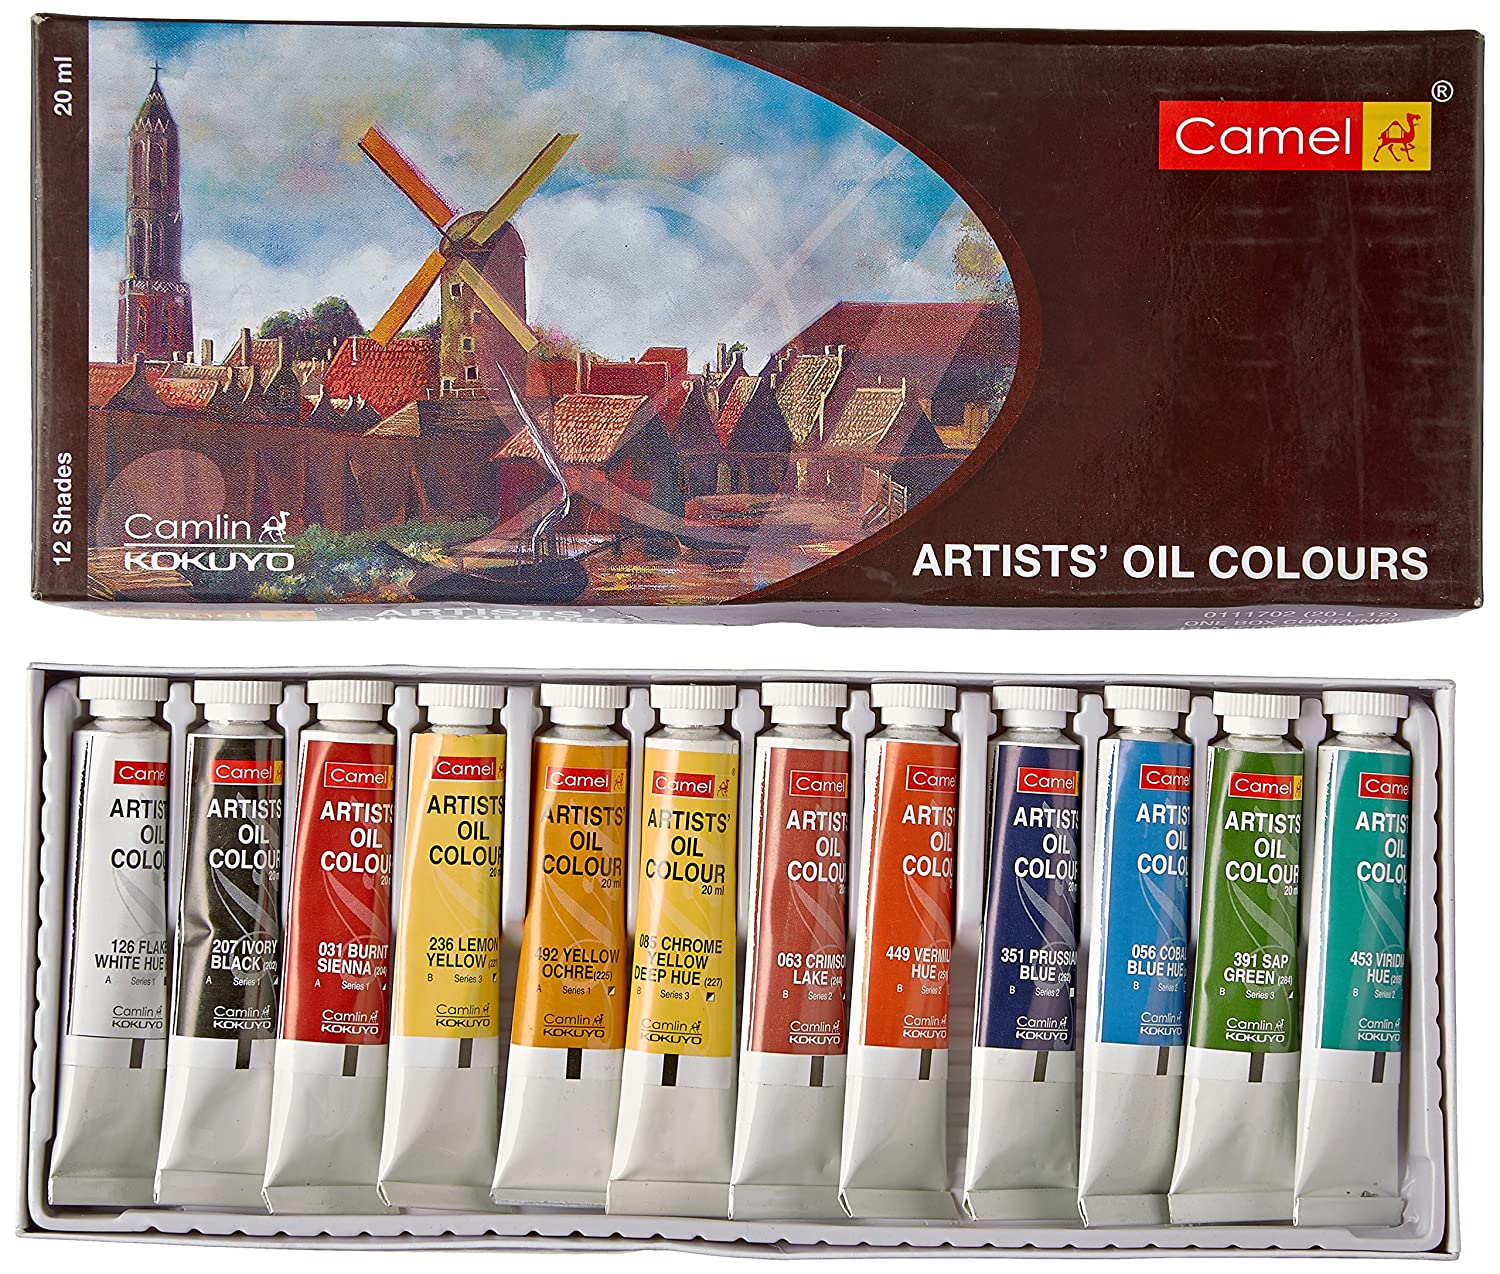 Camel Artist's Oil Color Box - 20ml Tubes, 12 Shades